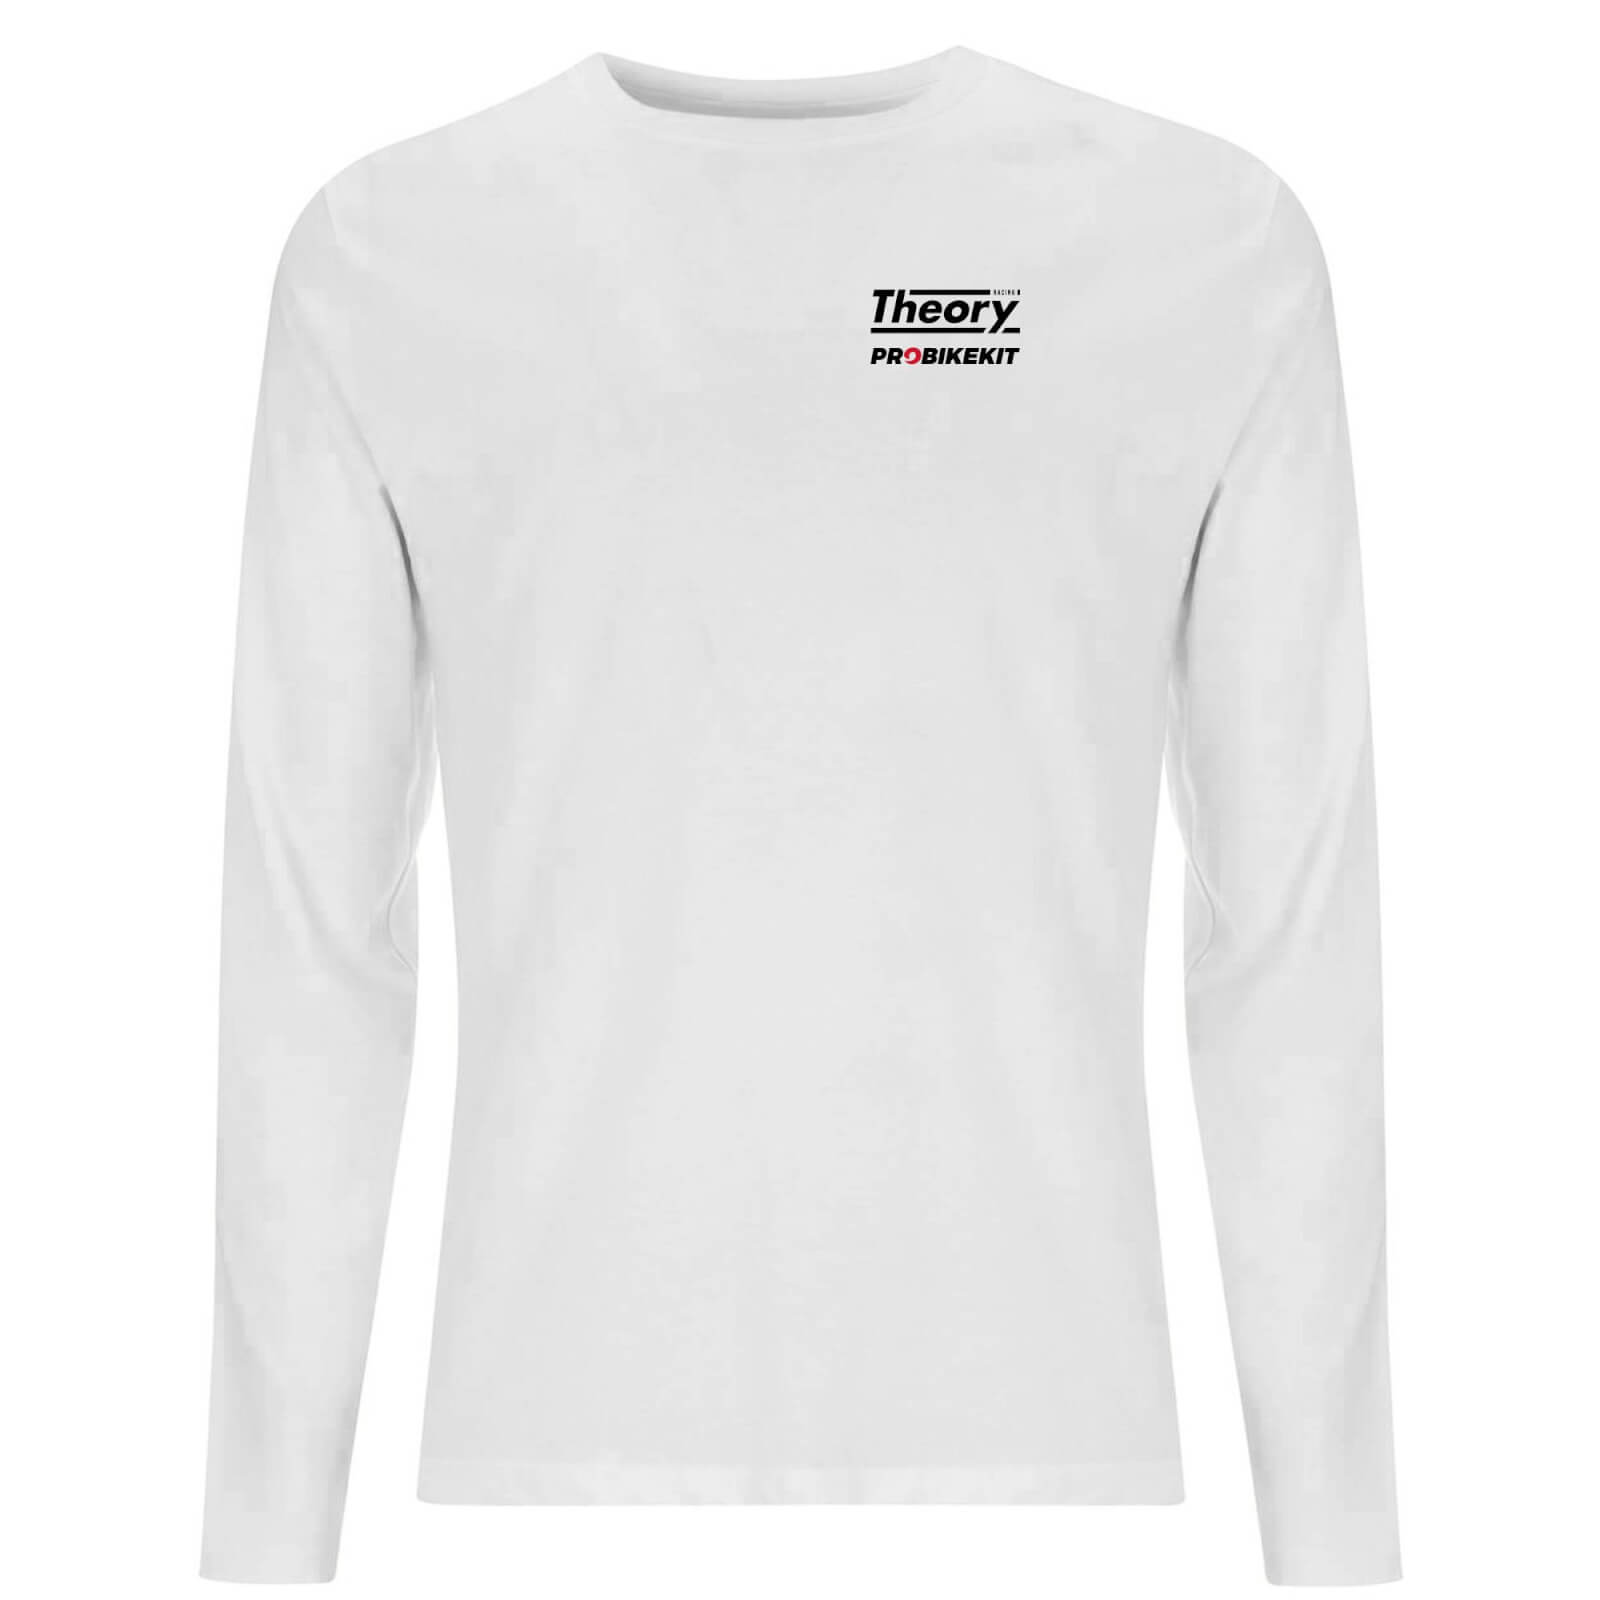 PBK Theory Logo Pocket Print Men's Long Sleeve T-Shirt - White - XL - White